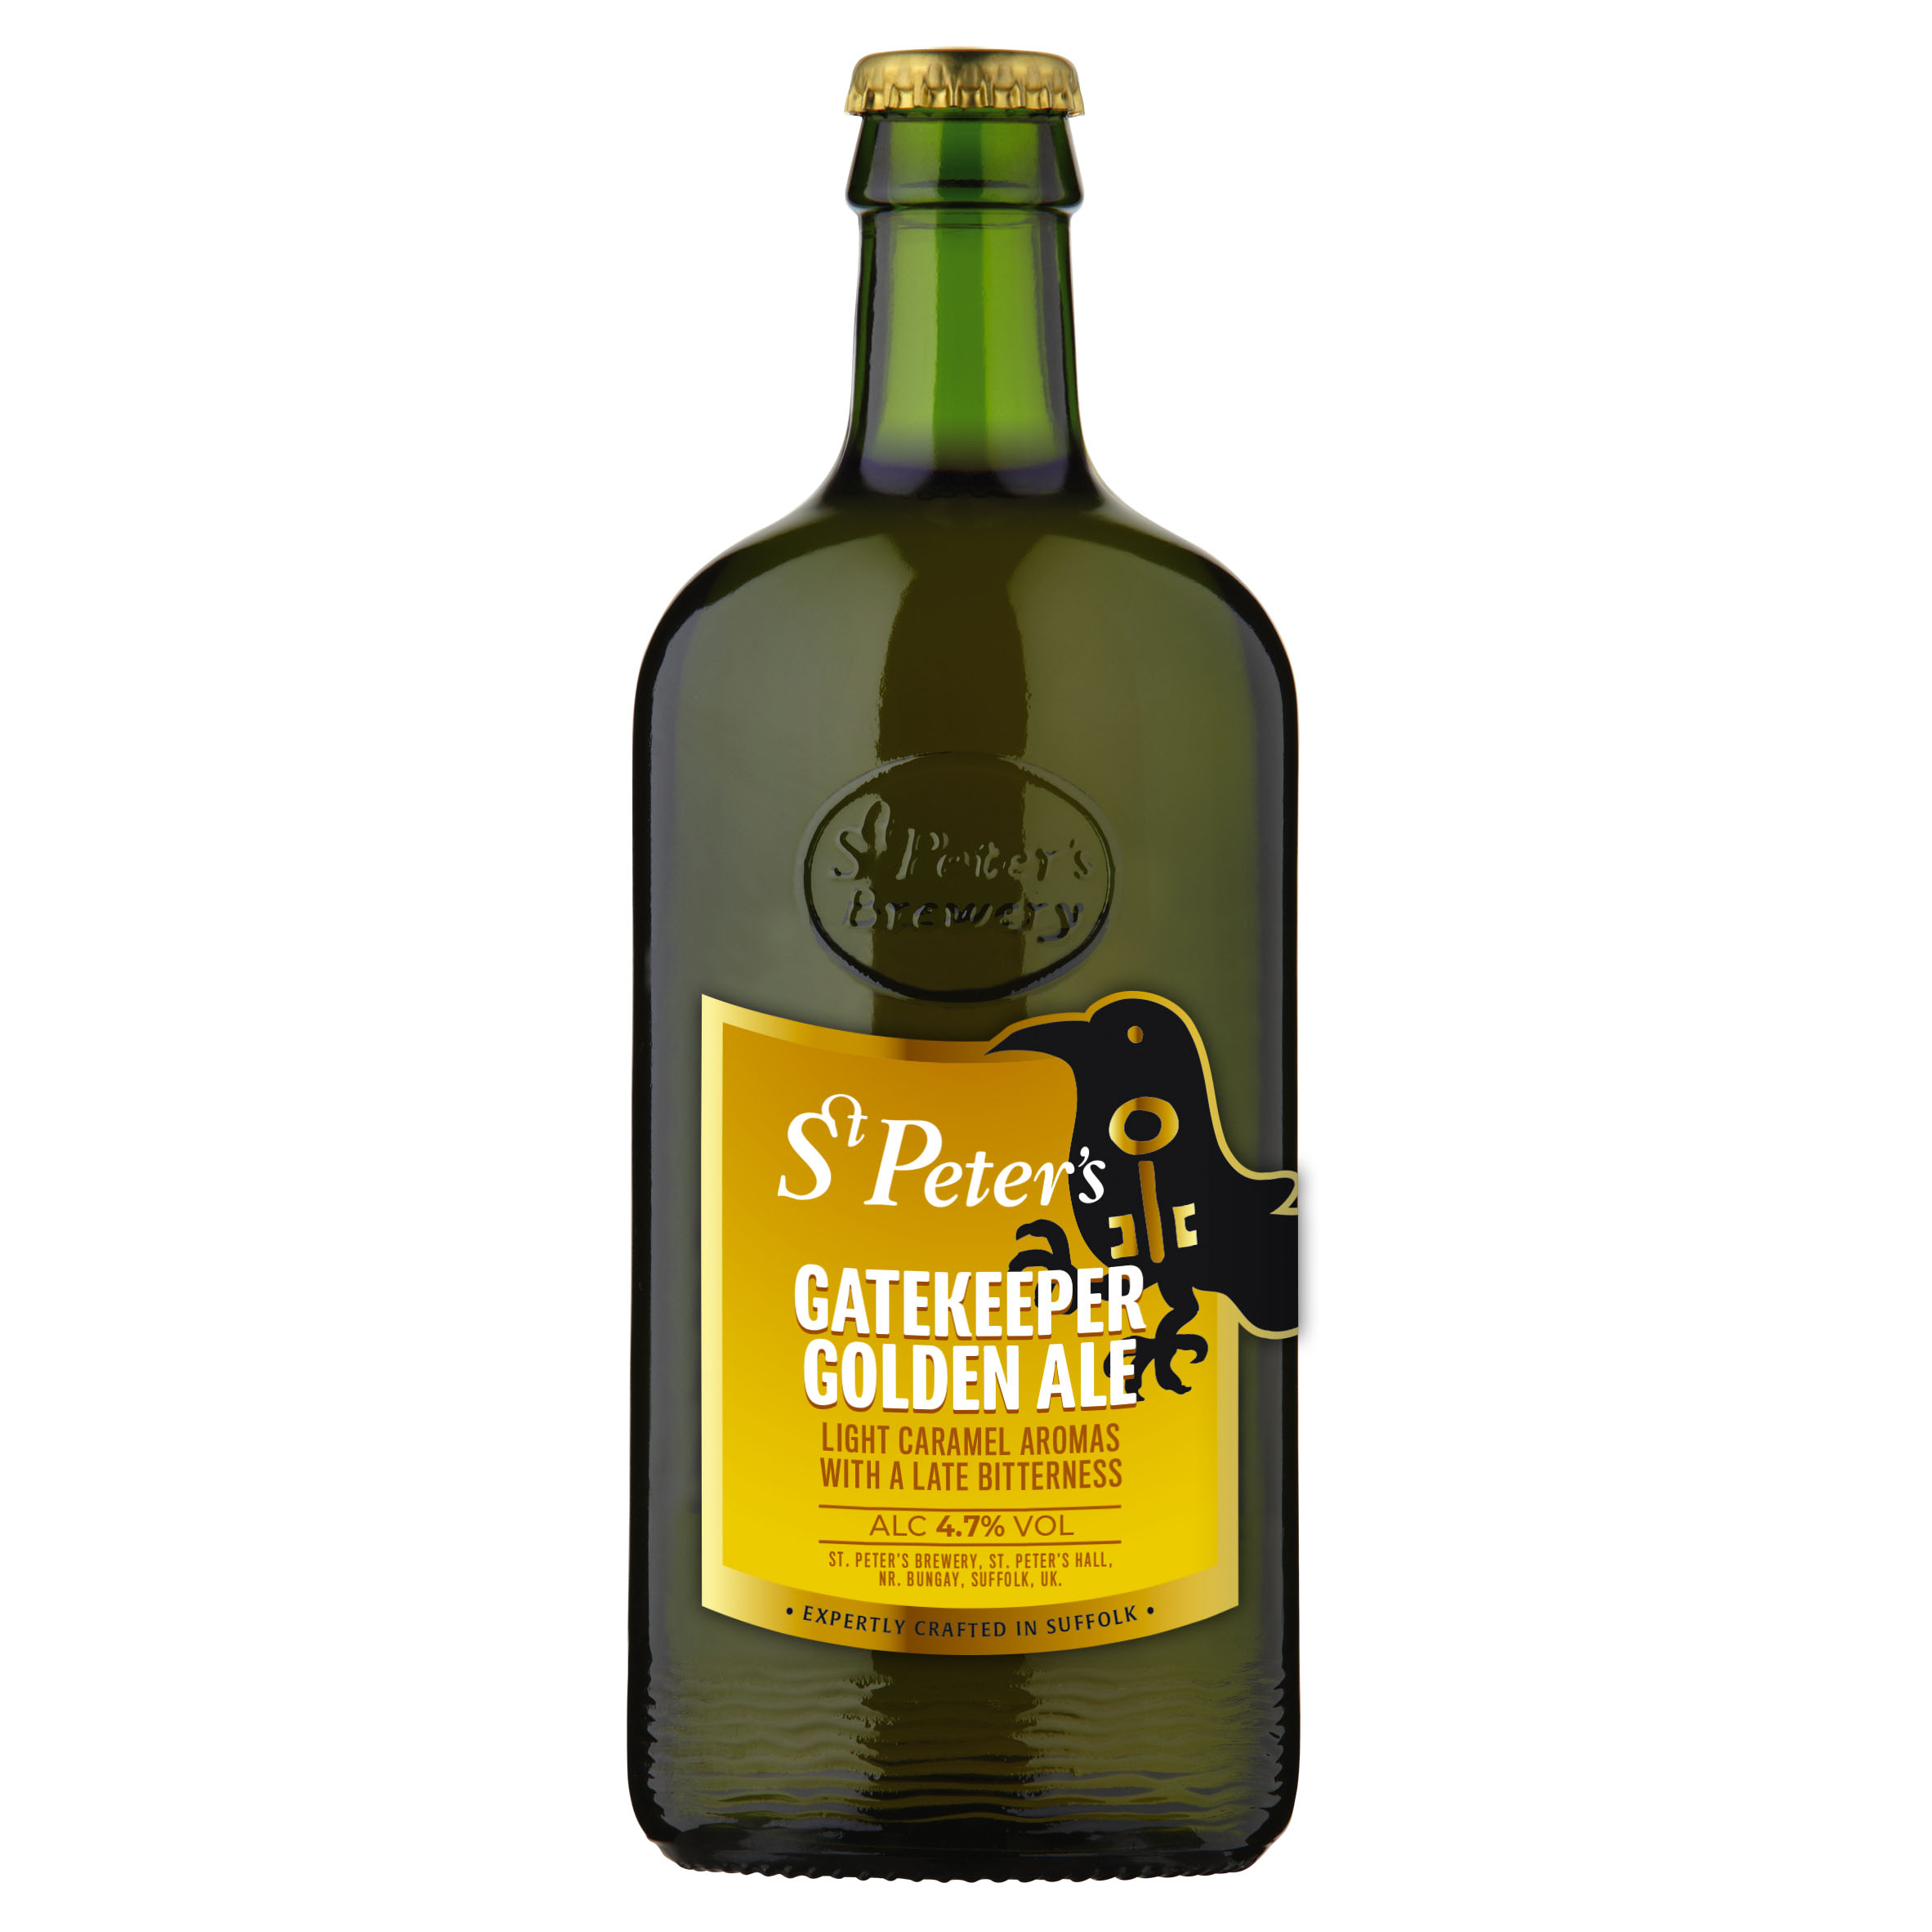 Peter s best. St.Peters Голден Эль. St Peters Golden ale. Ст Питерс пиво. St. Peter’s Эль.